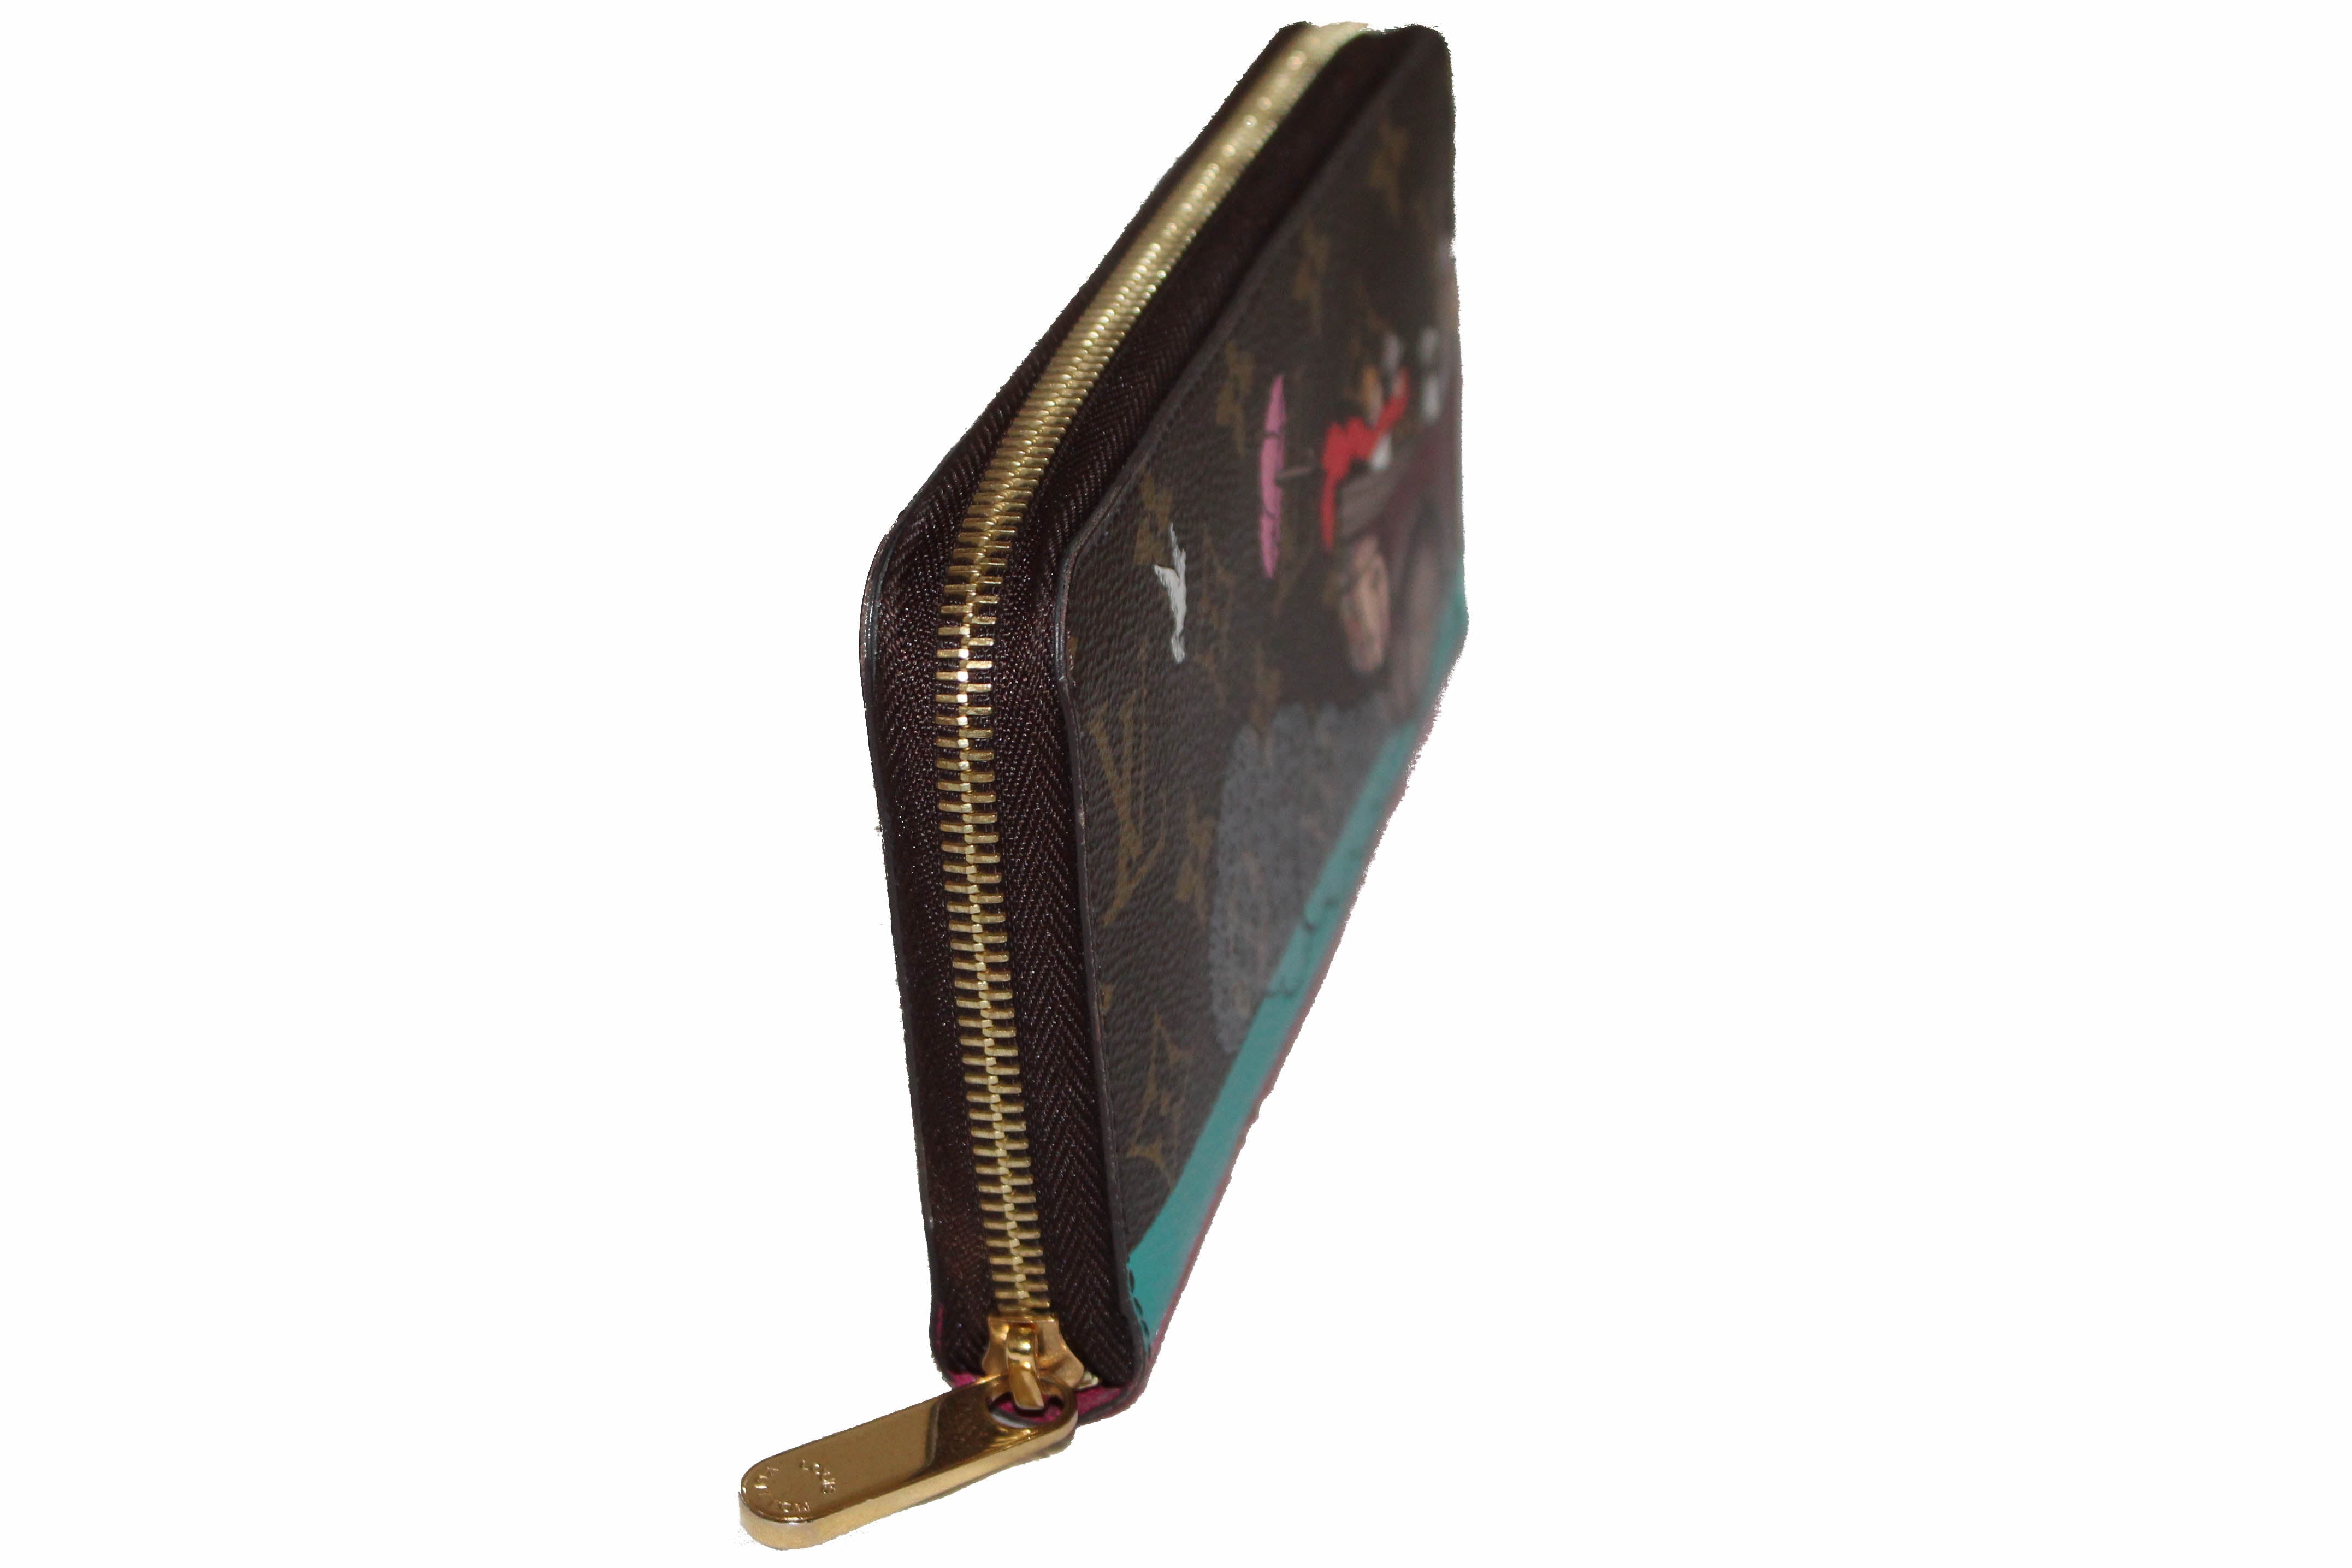 LOUIS VUITTON LV Zippy Medium Monogram Wallet Gold Hardware – AYAINLOVE  CURATED LUXURIES